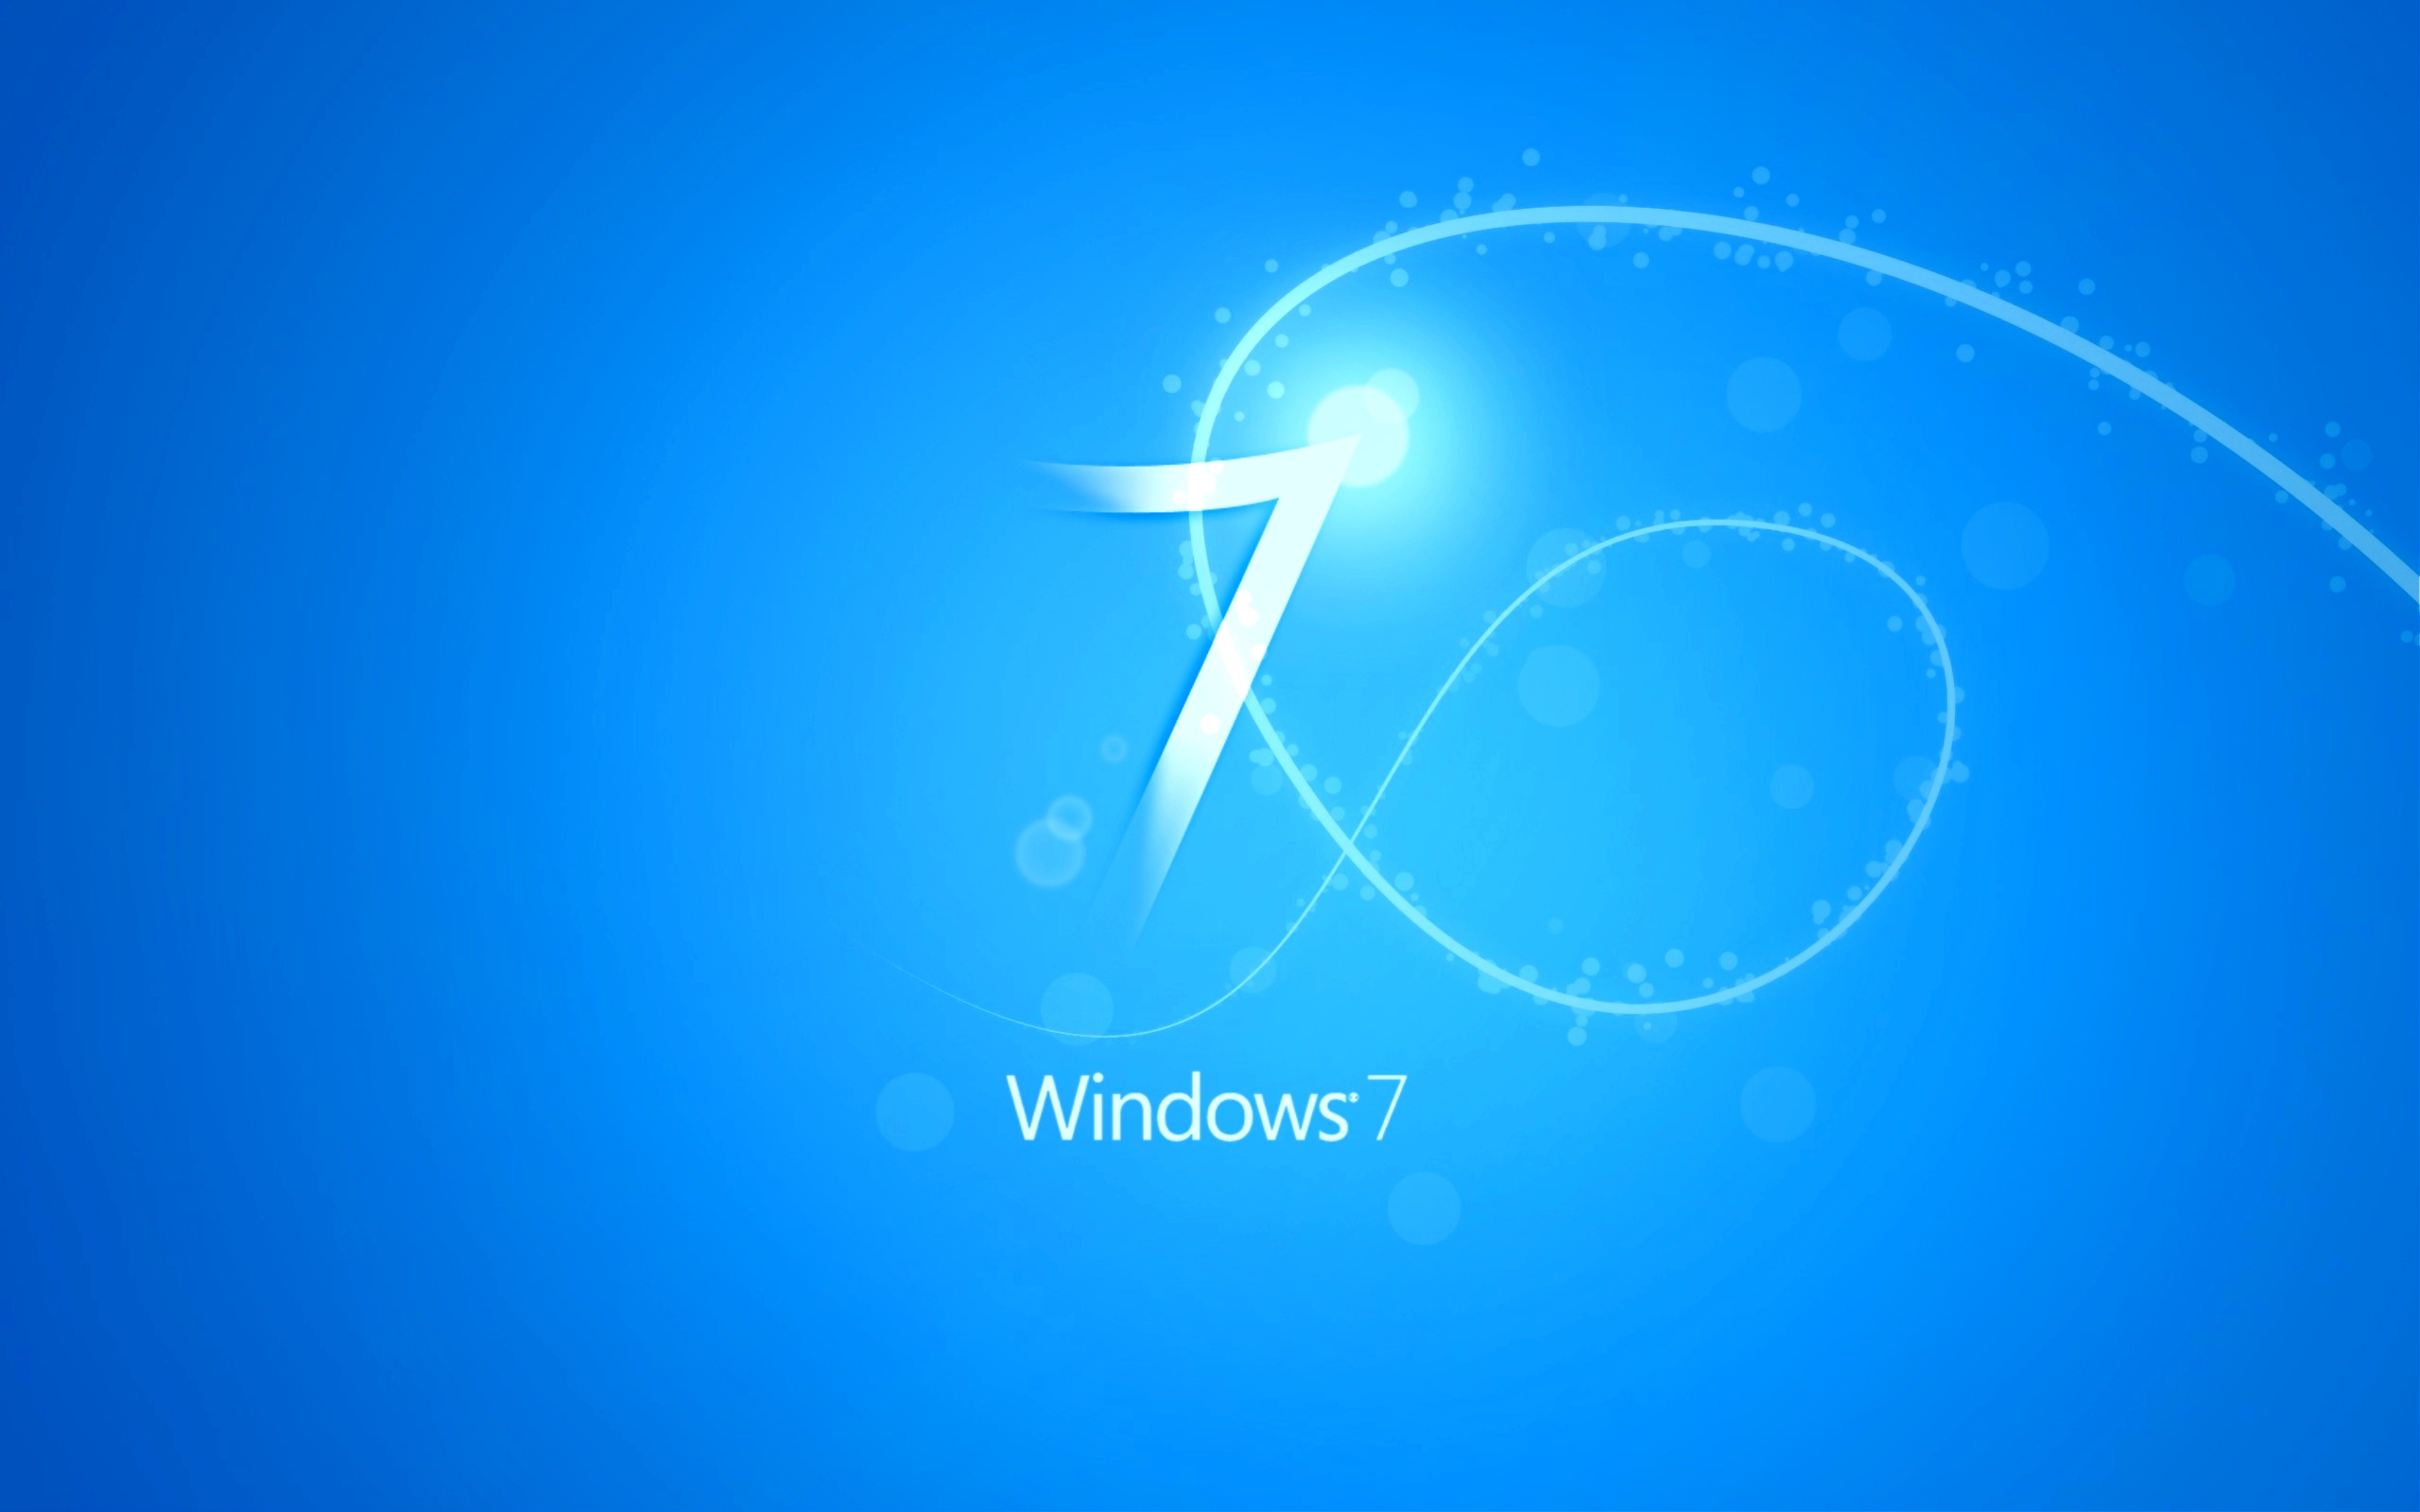 Windows 7 blue free desktop wallpapers Desktop Backgrounds for